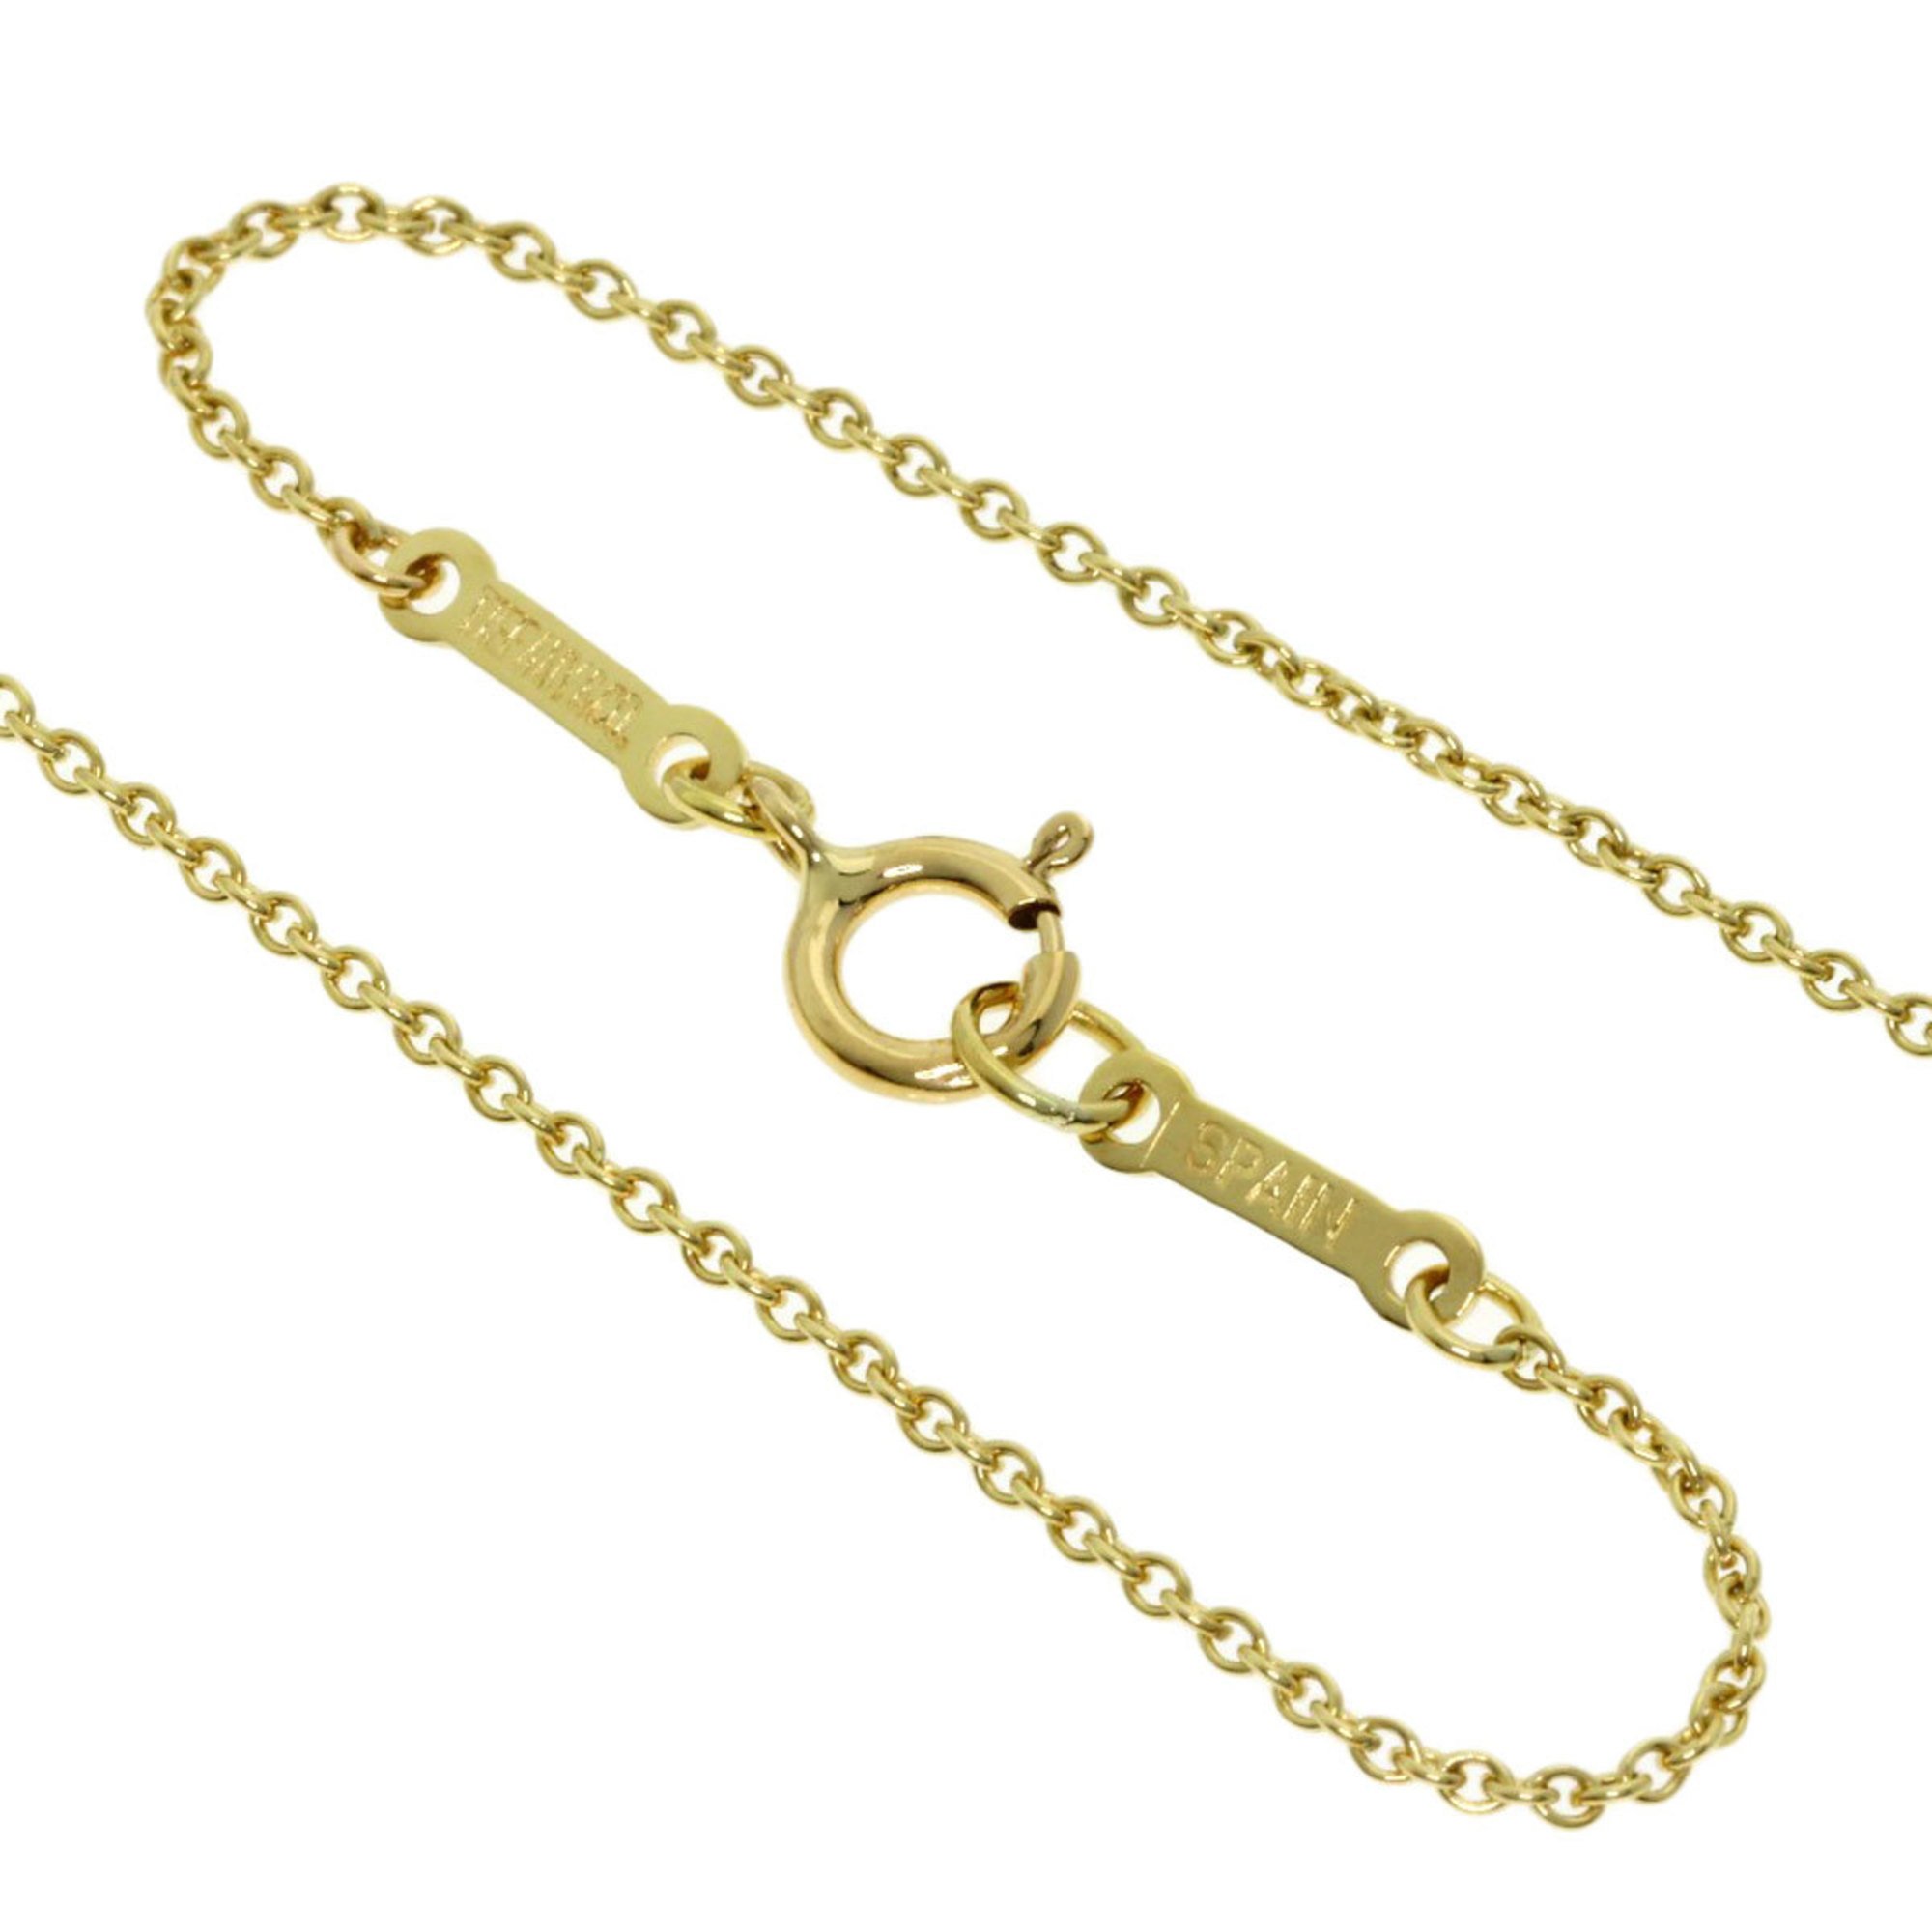 Tiffany teardrop necklace, 18k yellow gold, for women